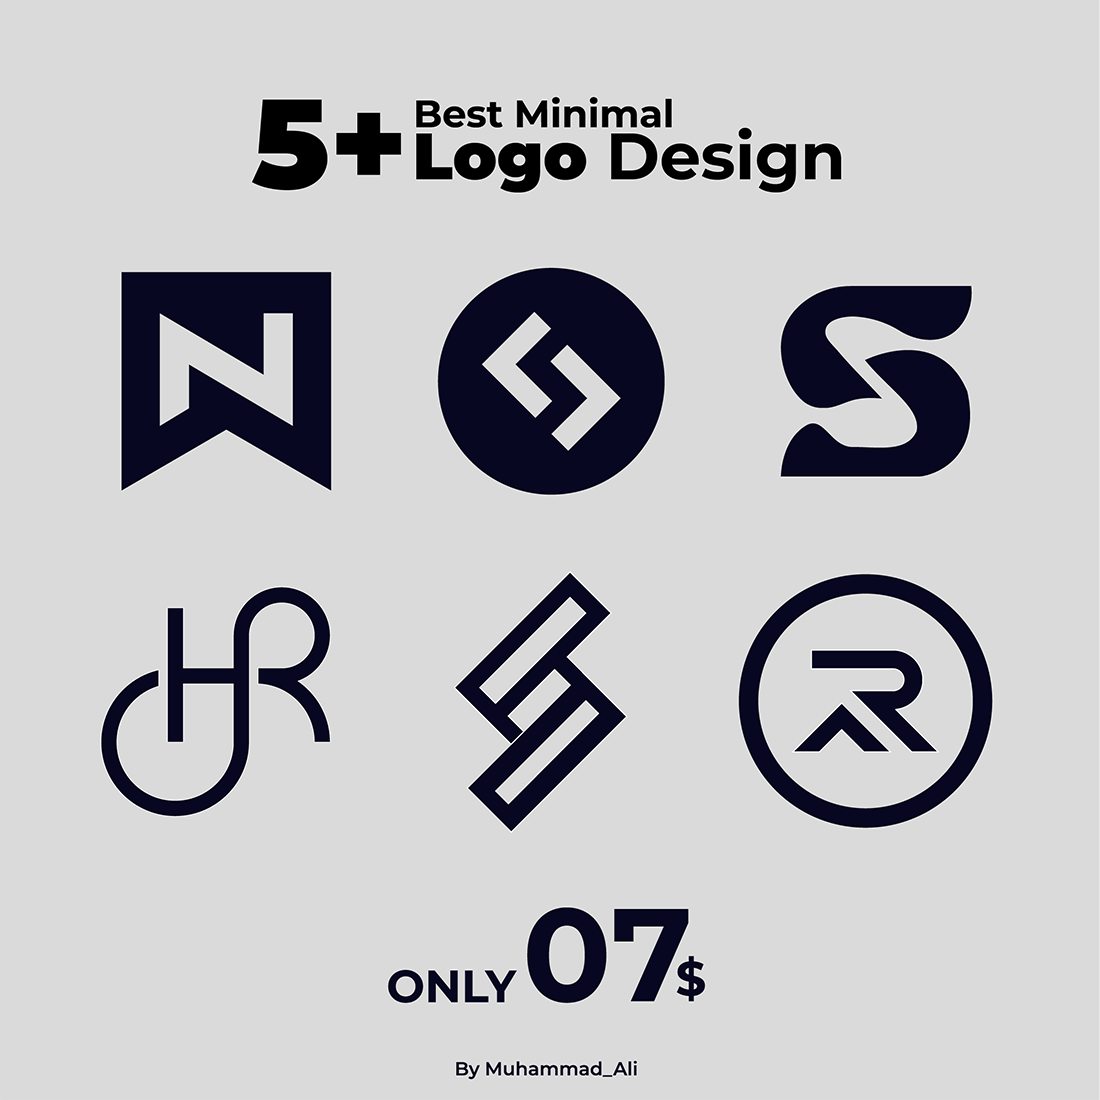 Best Minimal Logo Design cover image.